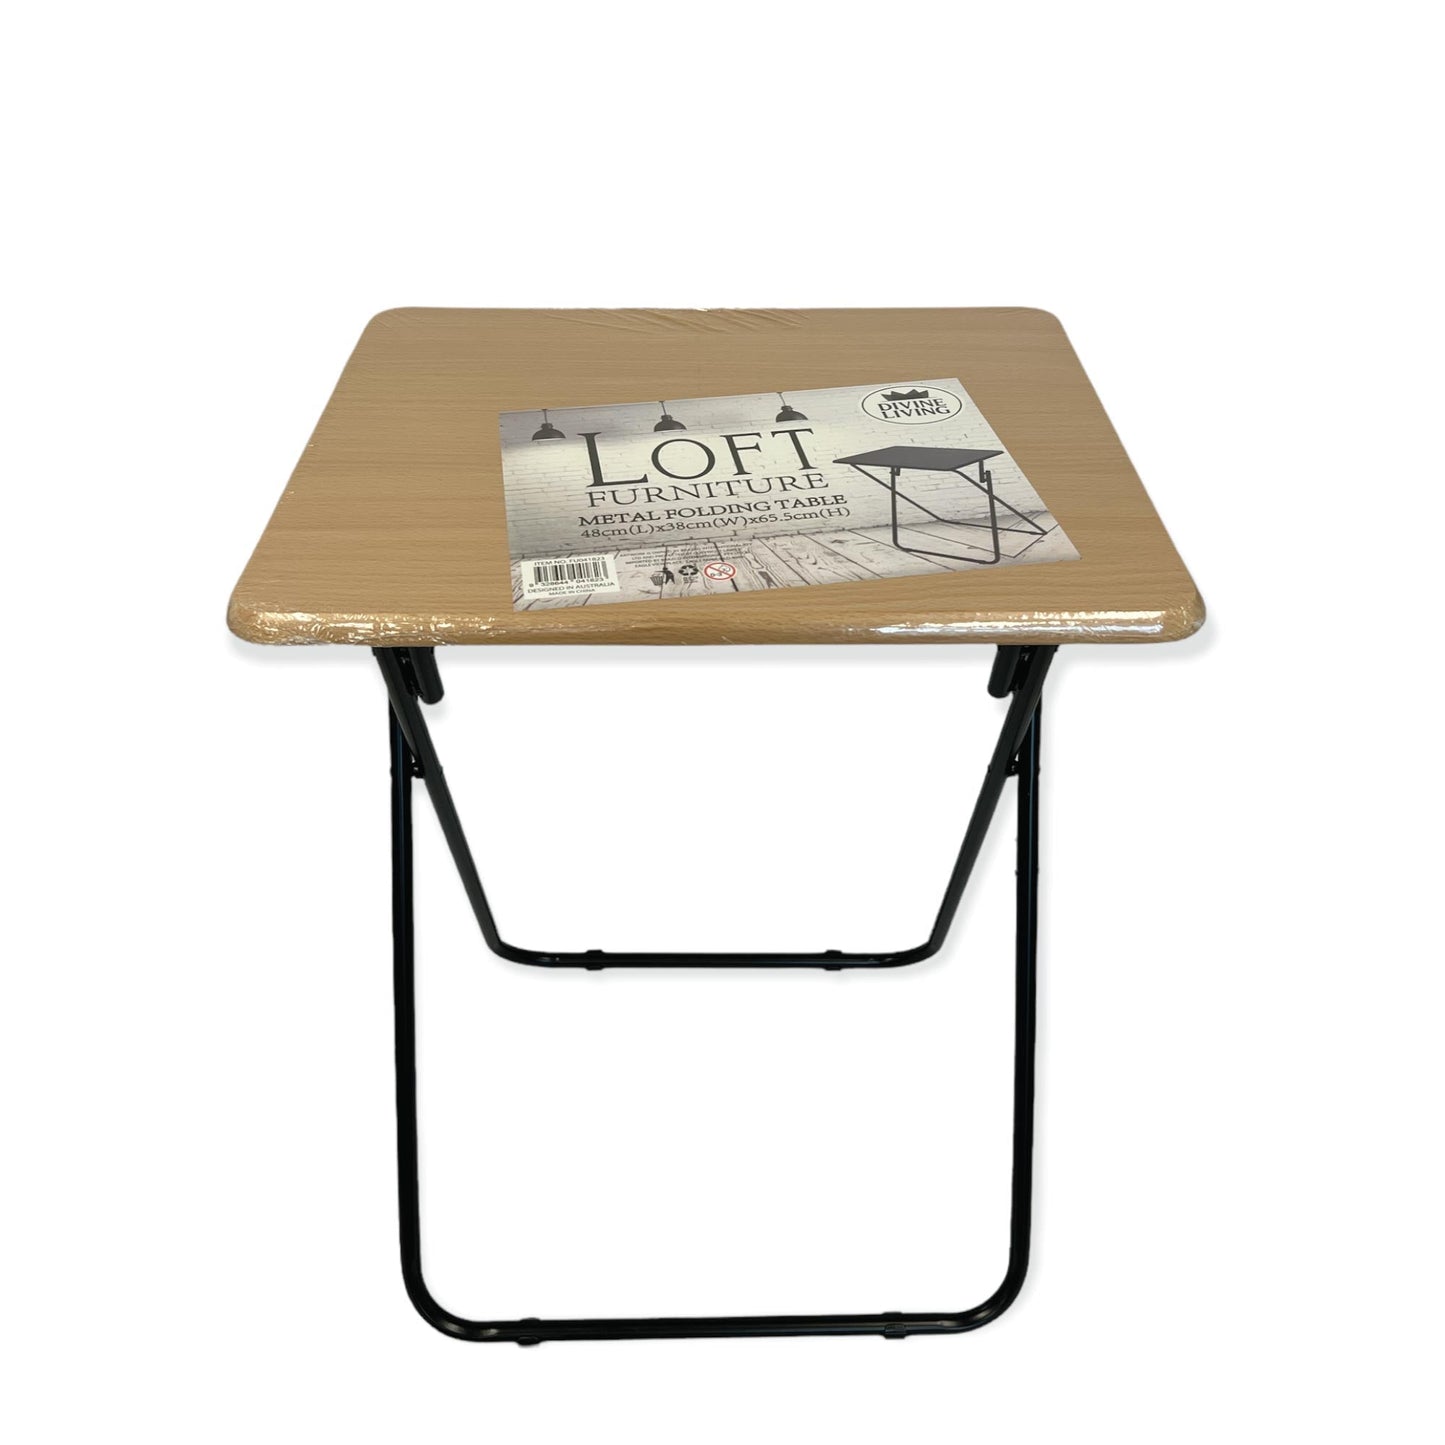 Metal MDF Folding Table Foldable Laptop PC Collapsible Study Desk 48cm x 38cm